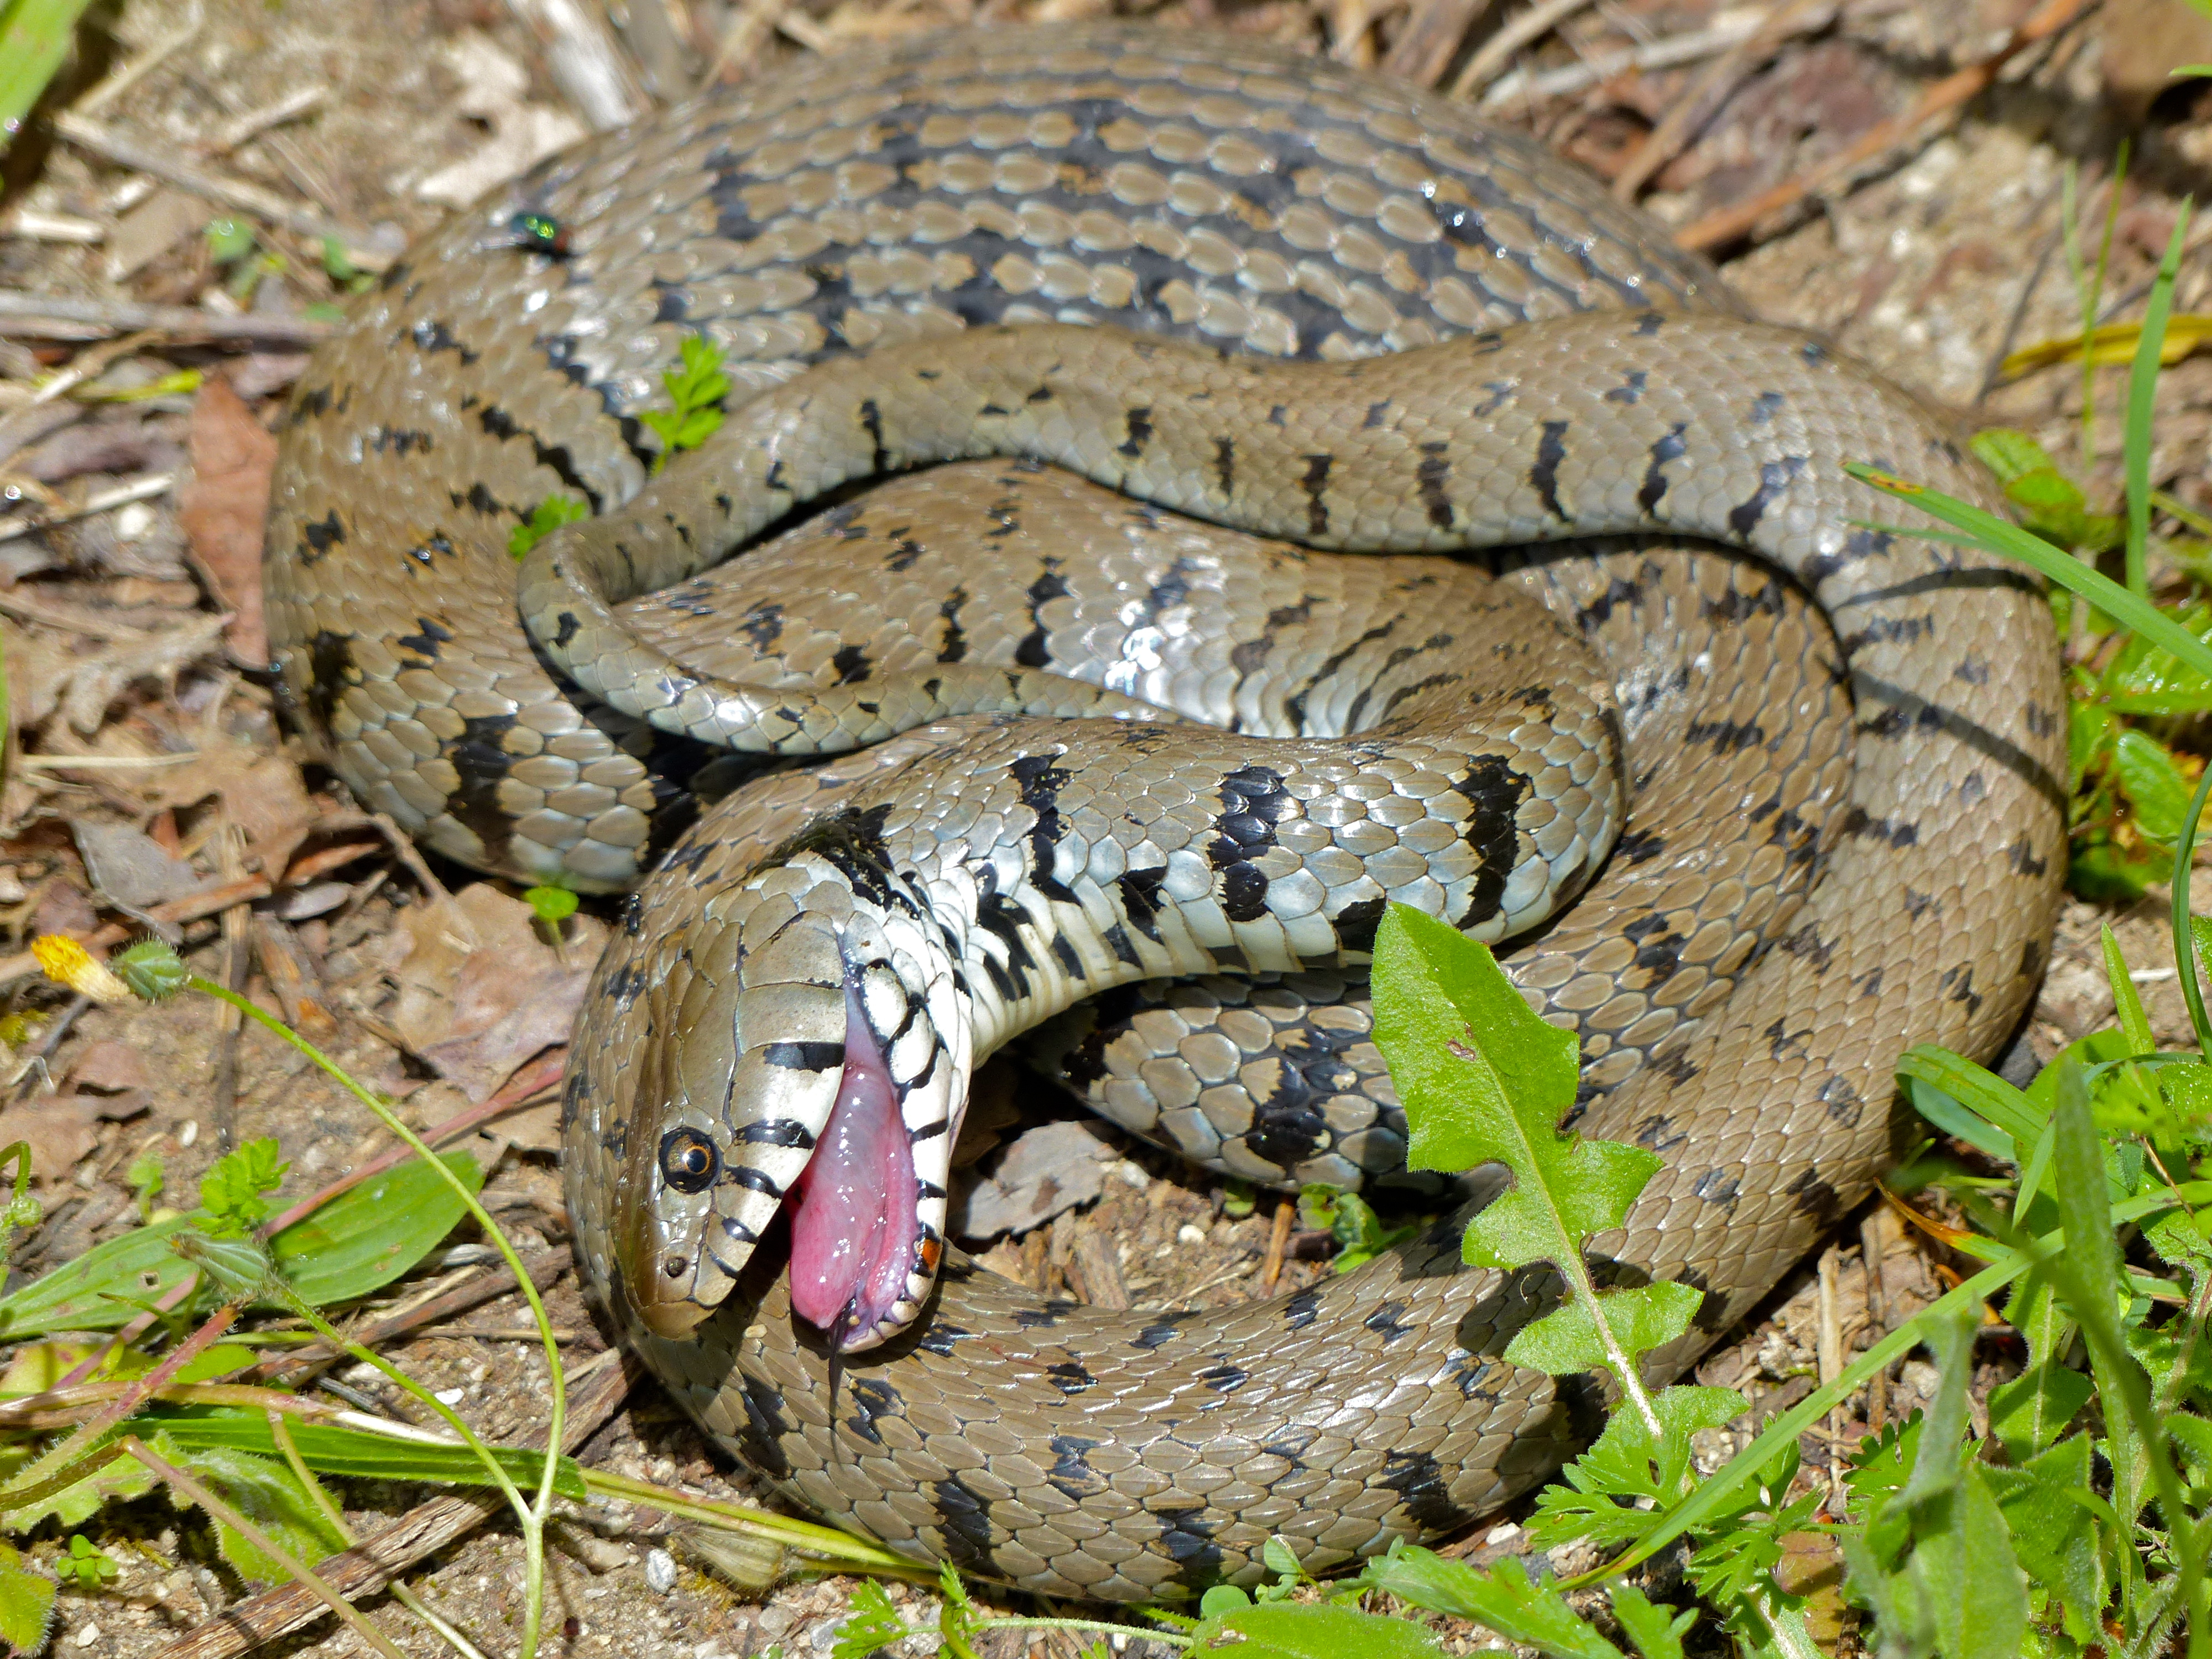 Barred grass snake - Wikipedia